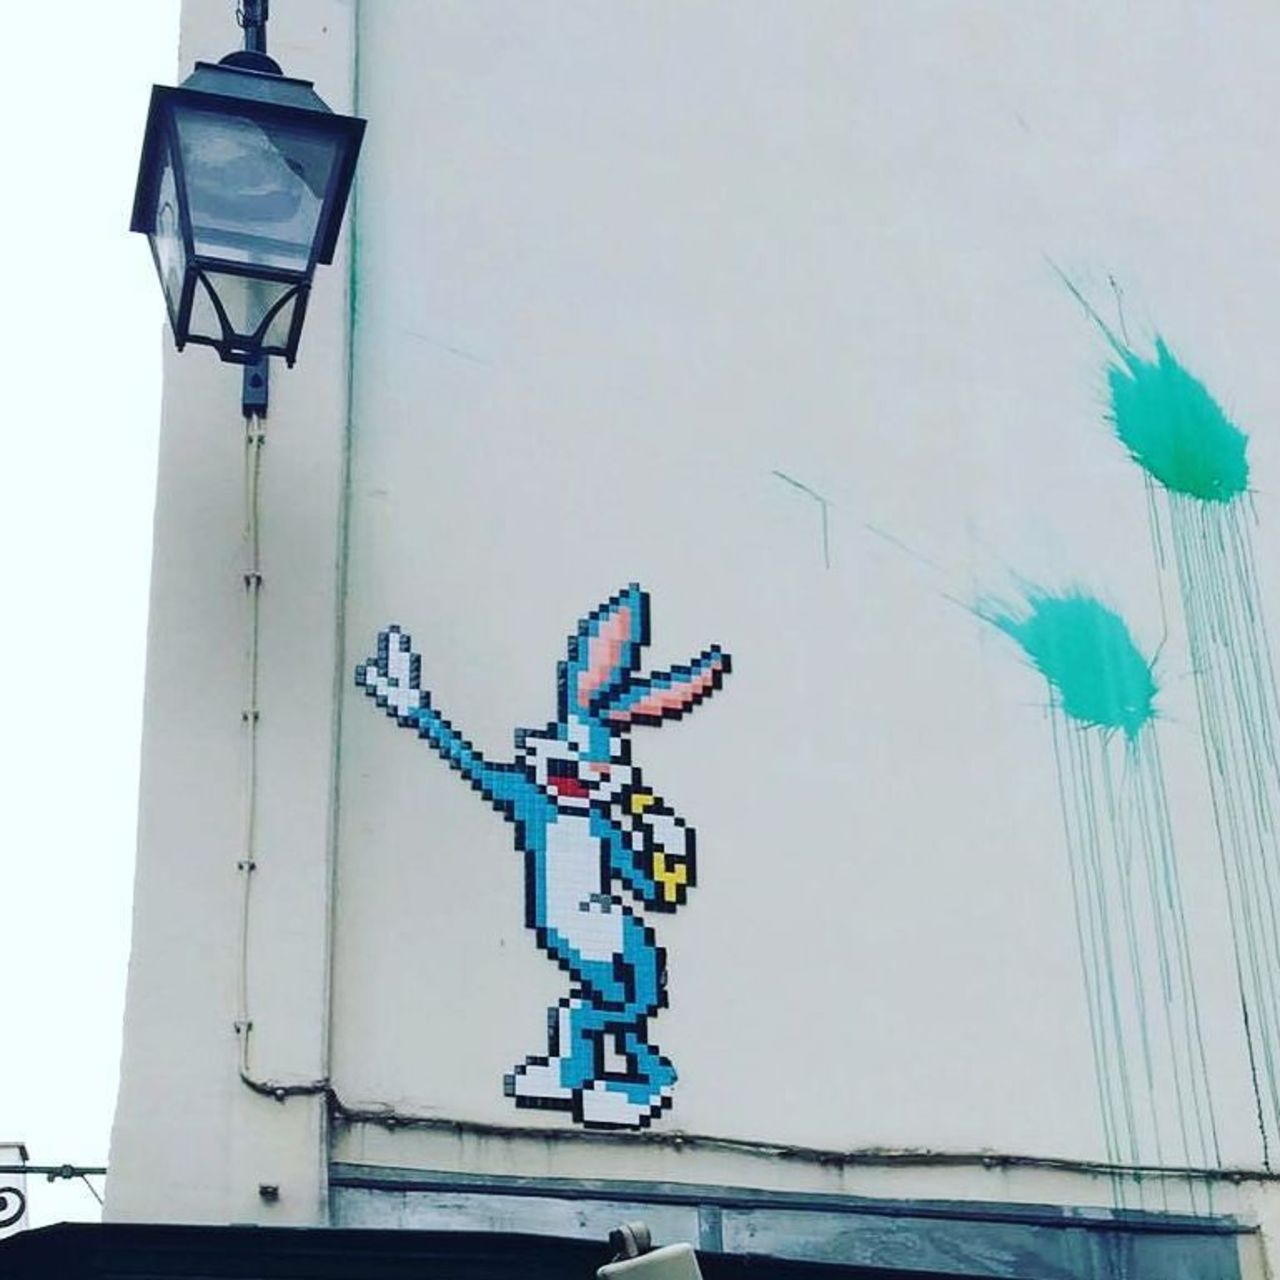 #bugsbunny in #Paris #banana #8bit #streetart  #art #graffiti #streetartparis #France #urbanart #warnerbros by babb… https://t.co/p5ZxsfNto0